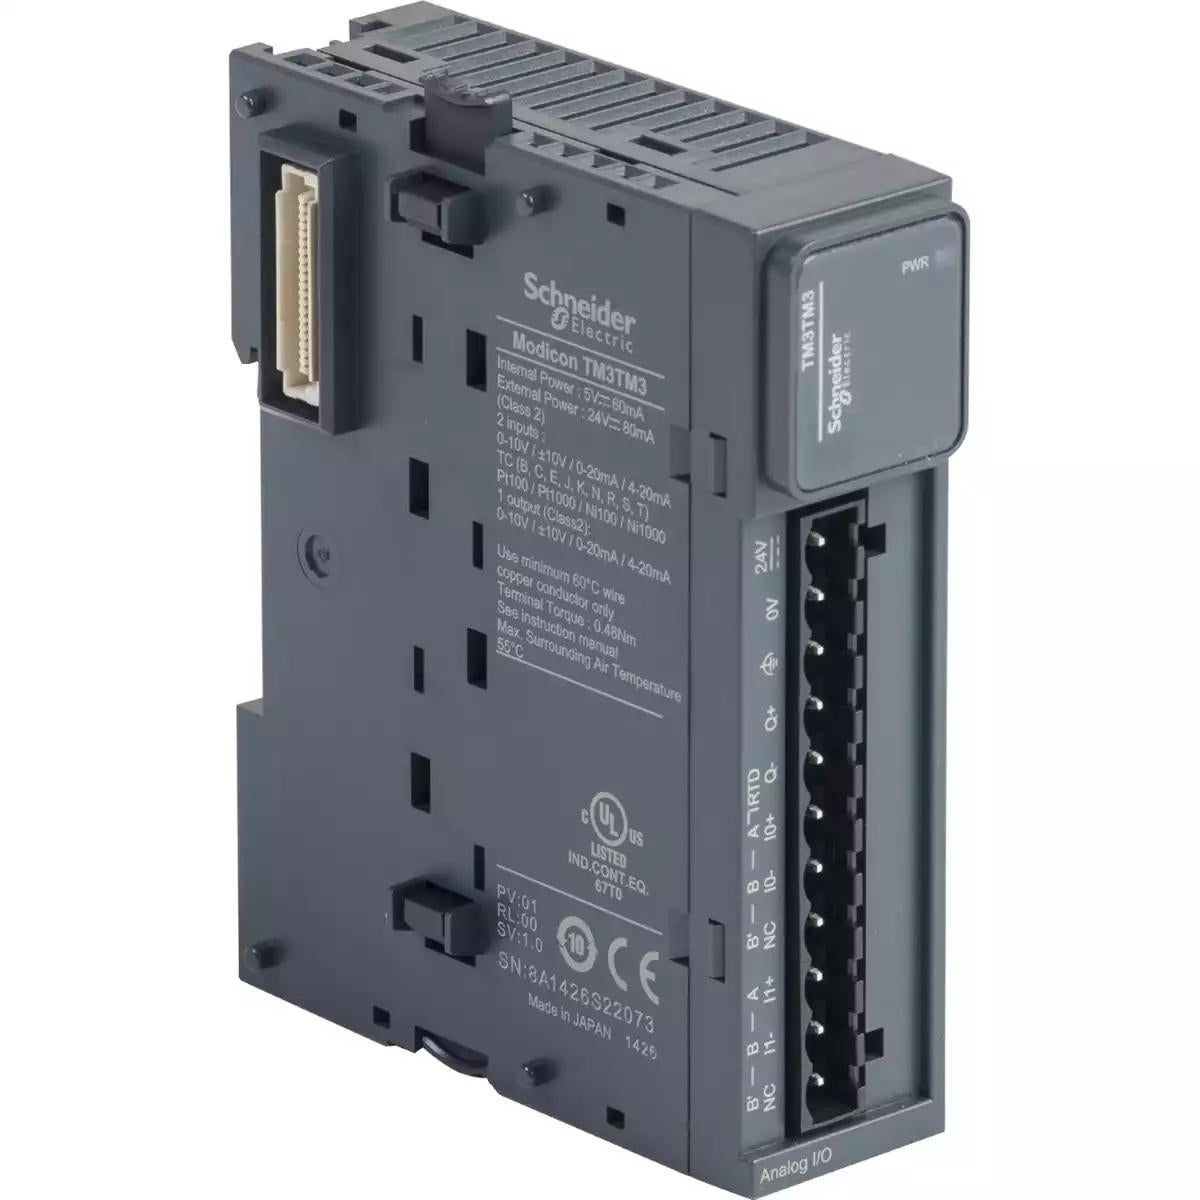 Schneider Electric Modicon TM3 - 2 analog or temperature inputs, 1 analog output (screw) 24Vdc